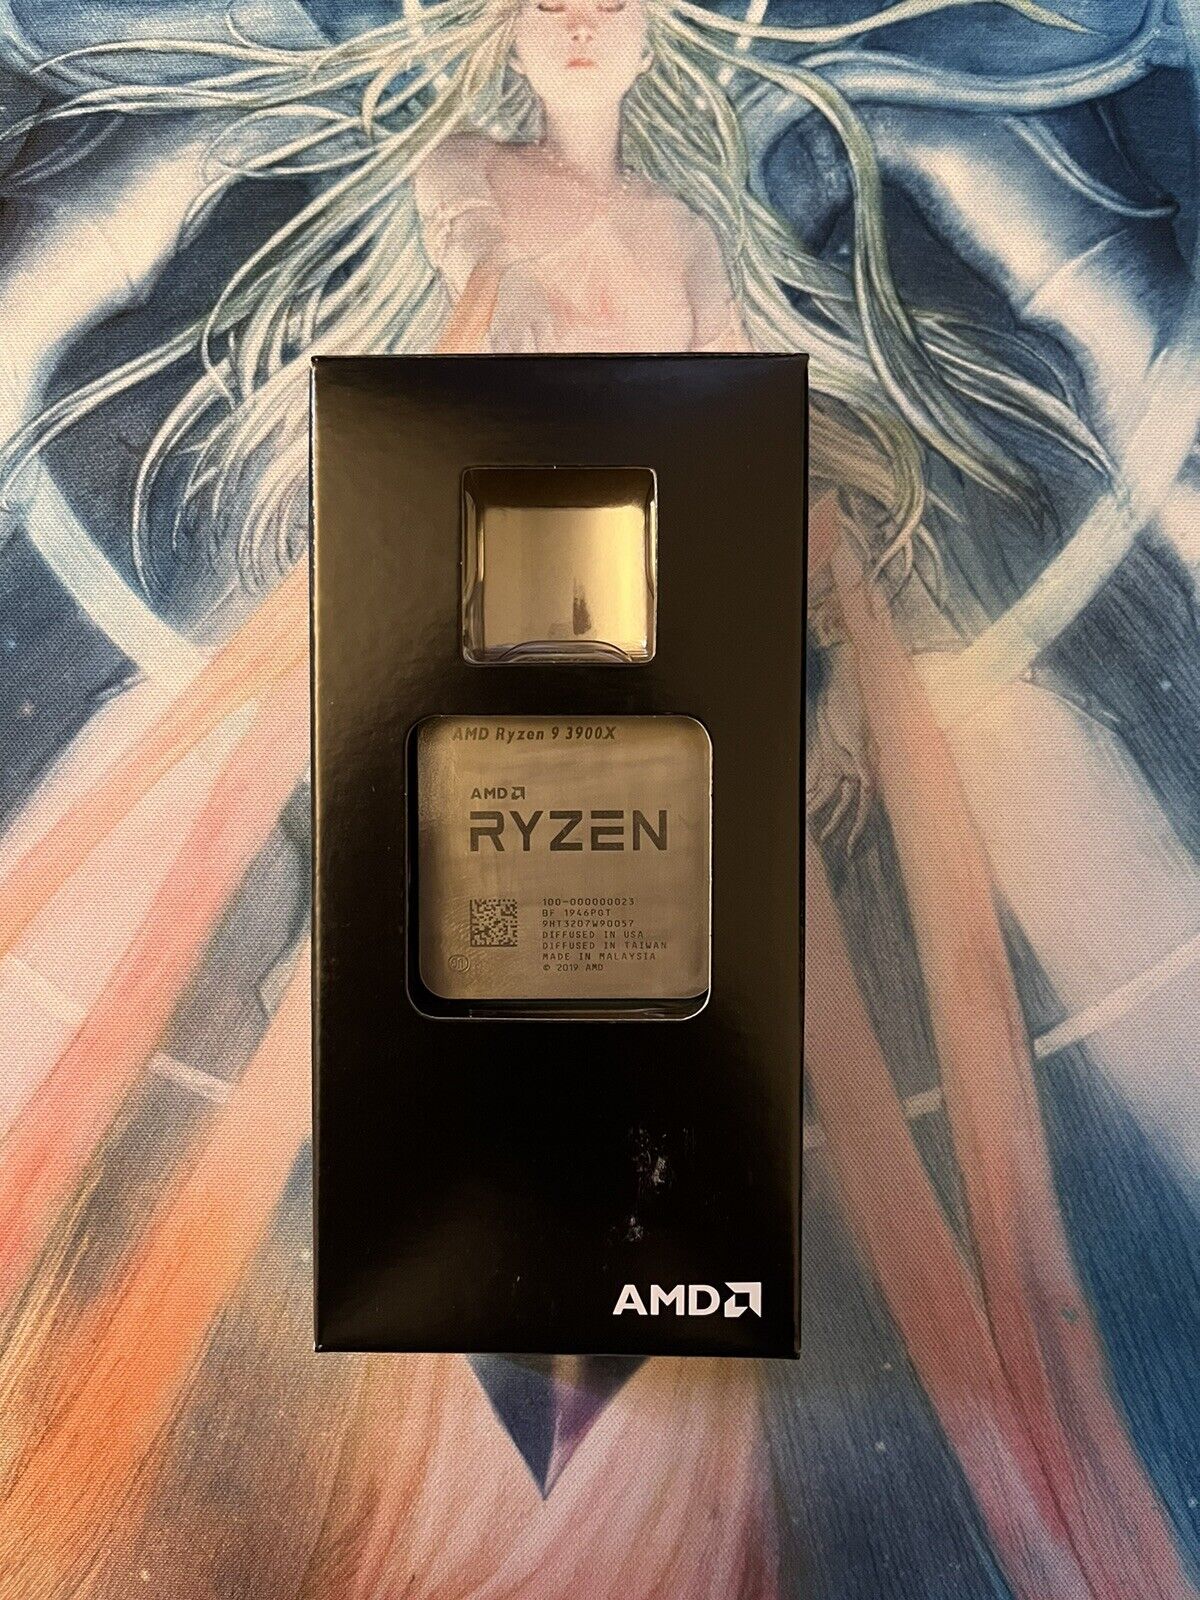 AMD Ryzen 9 3900X Processor 3.8 GHz, 12-Cores, Socket AM4